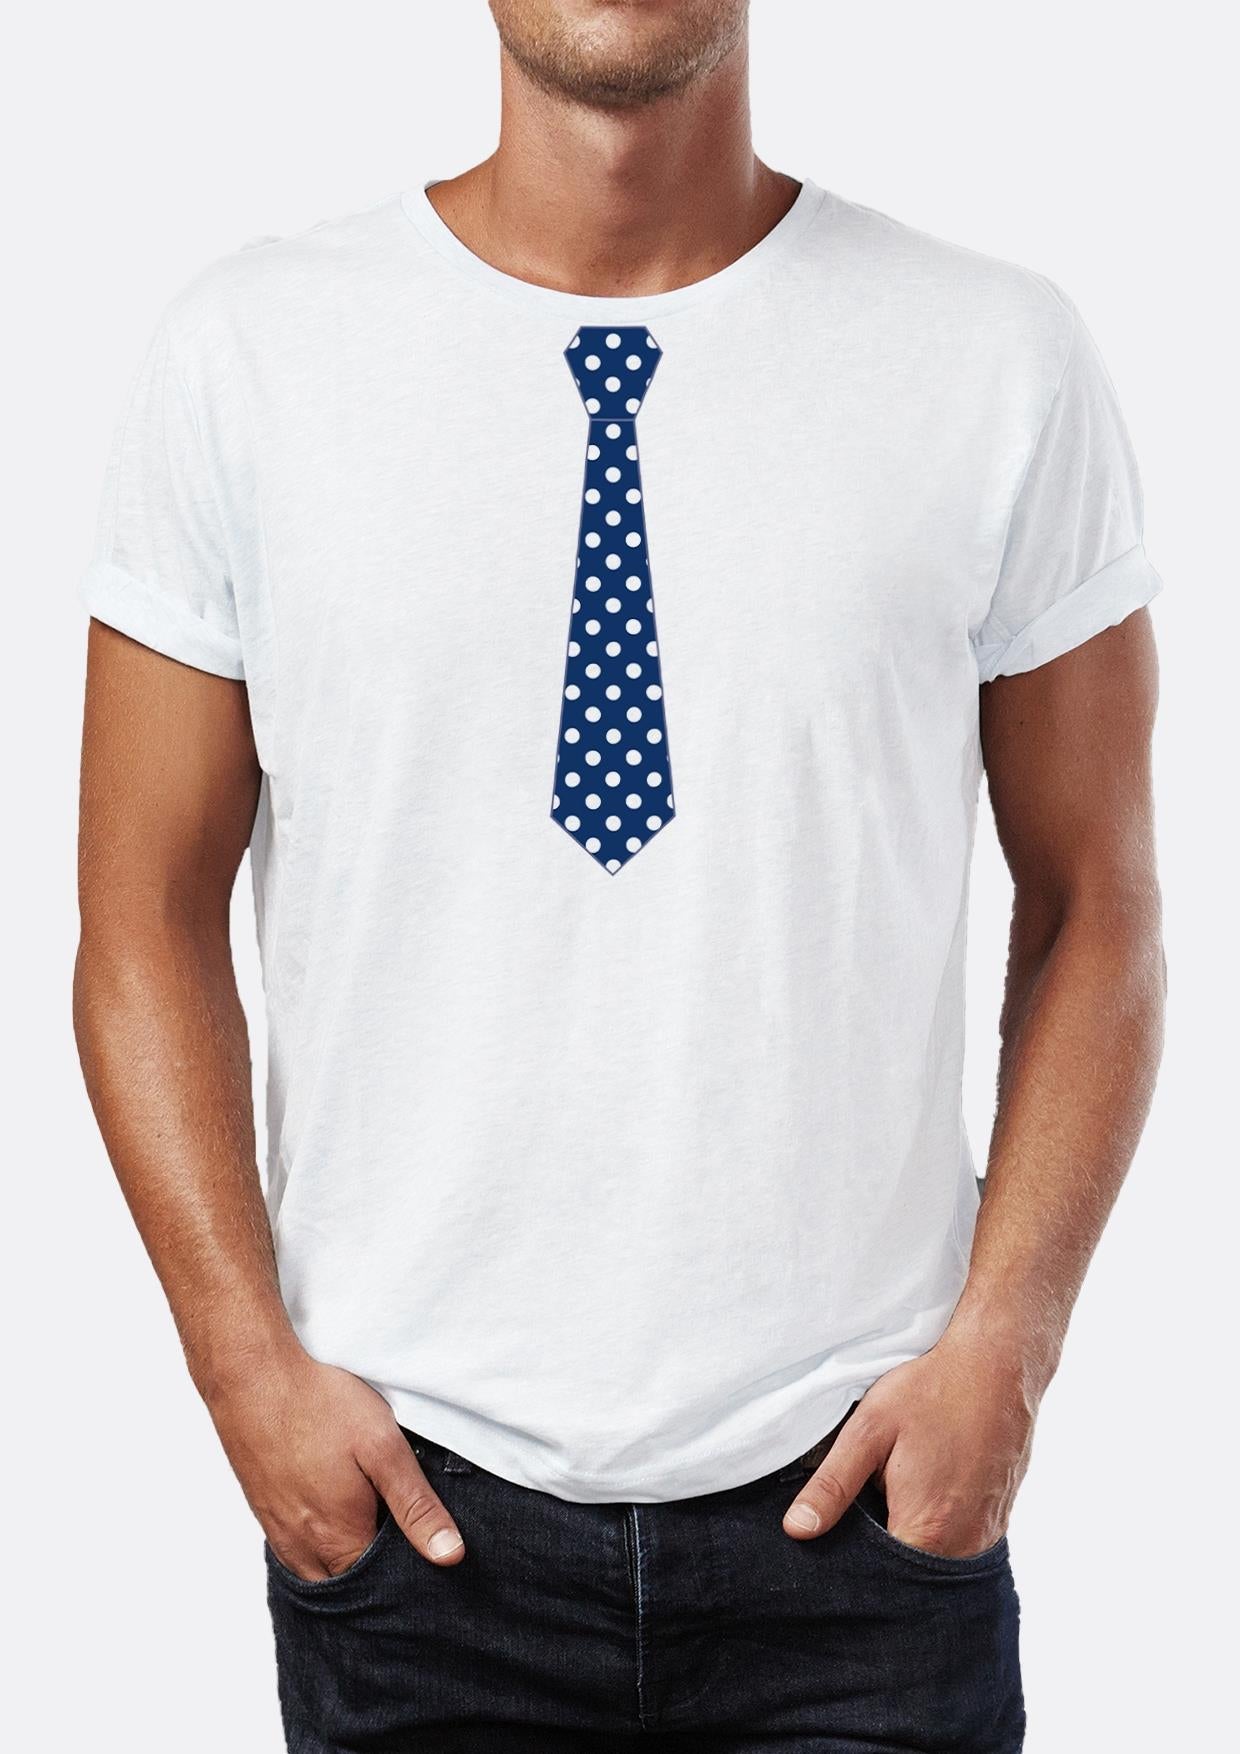 Blue polka dot tie printed Crew Neck men's t -shirt